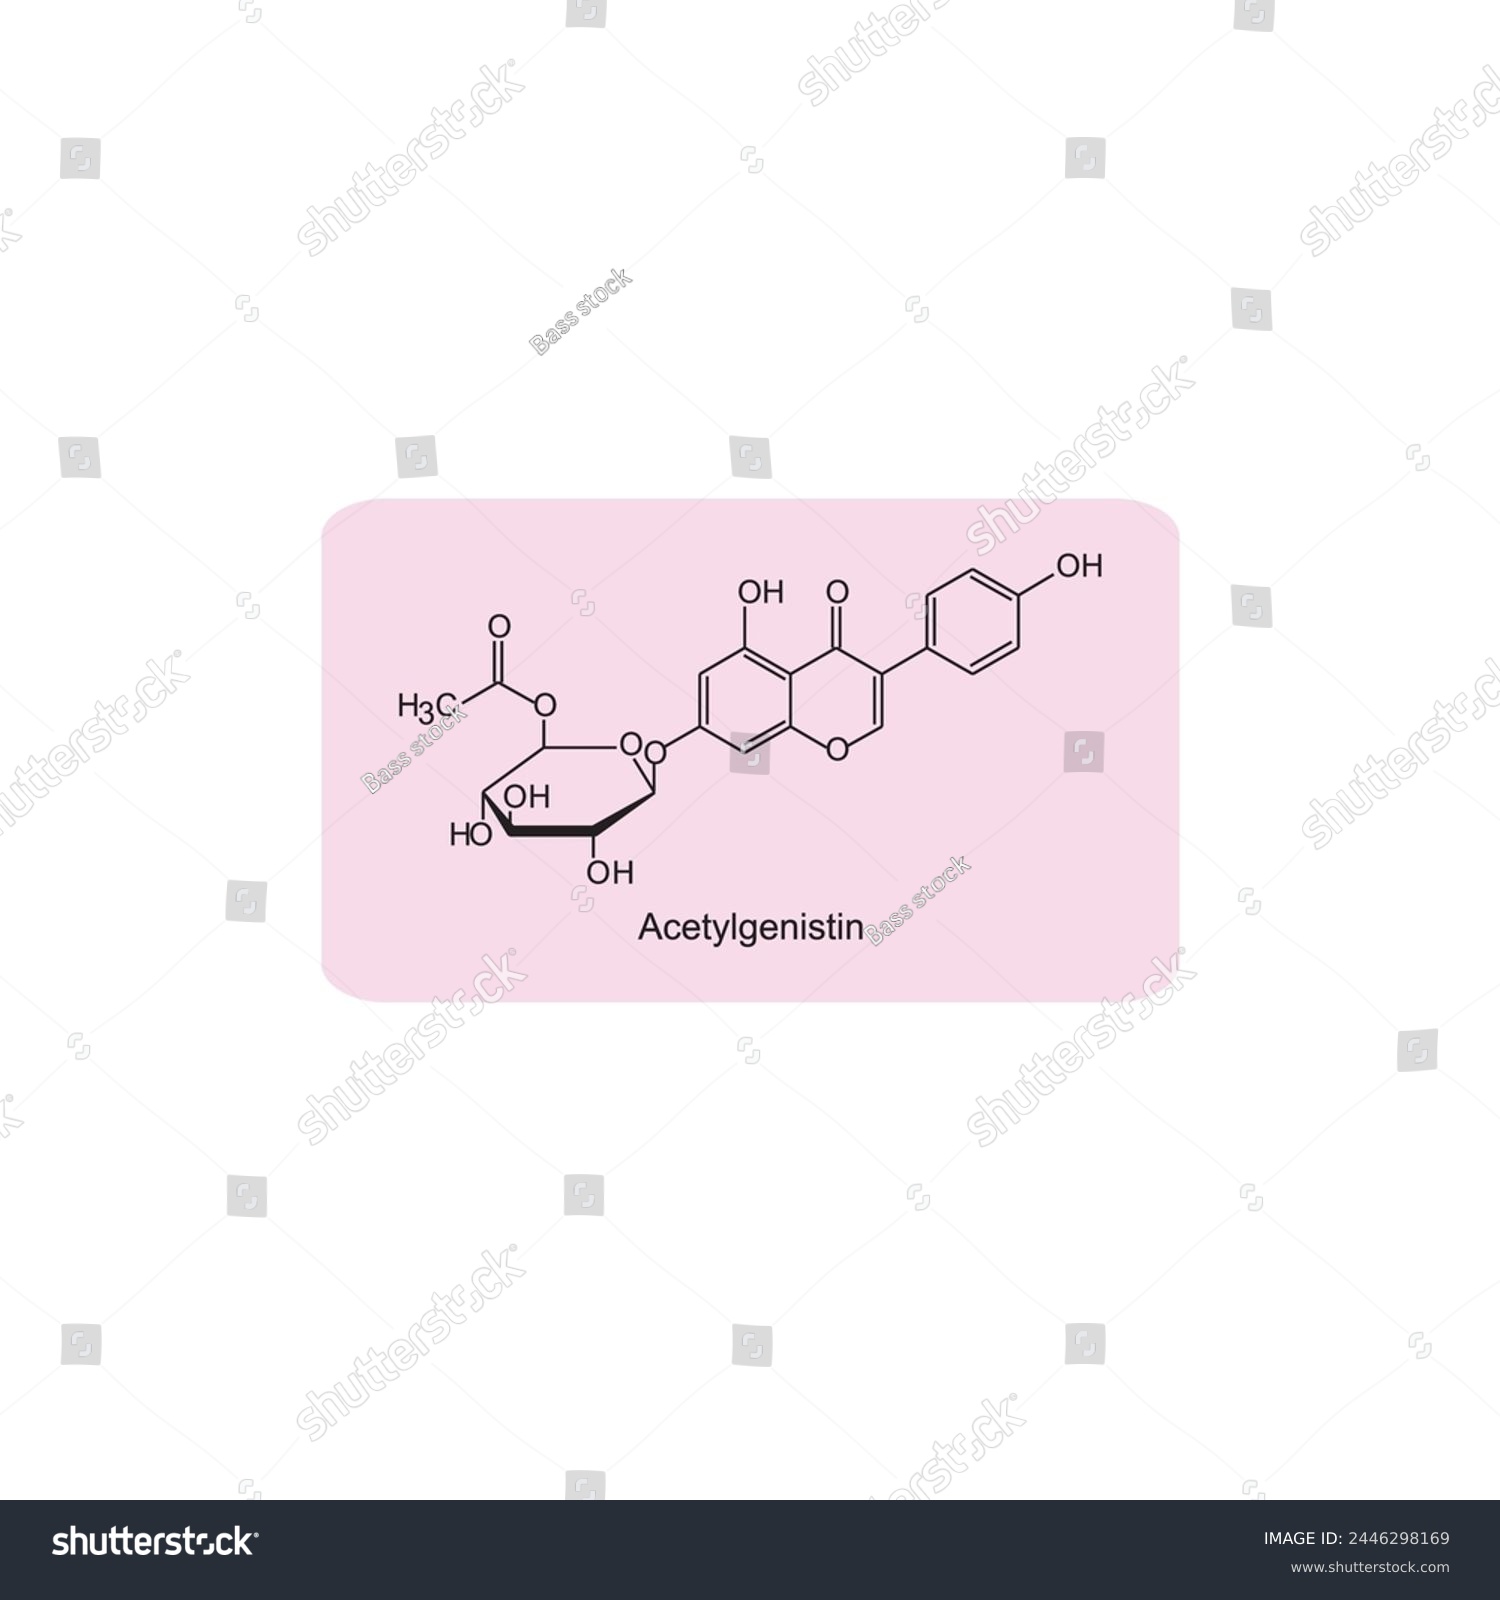 SVG of Acetylgenistin skeletal structure diagram.Isoflavanone compound molecule scientific illustration on pink background. svg